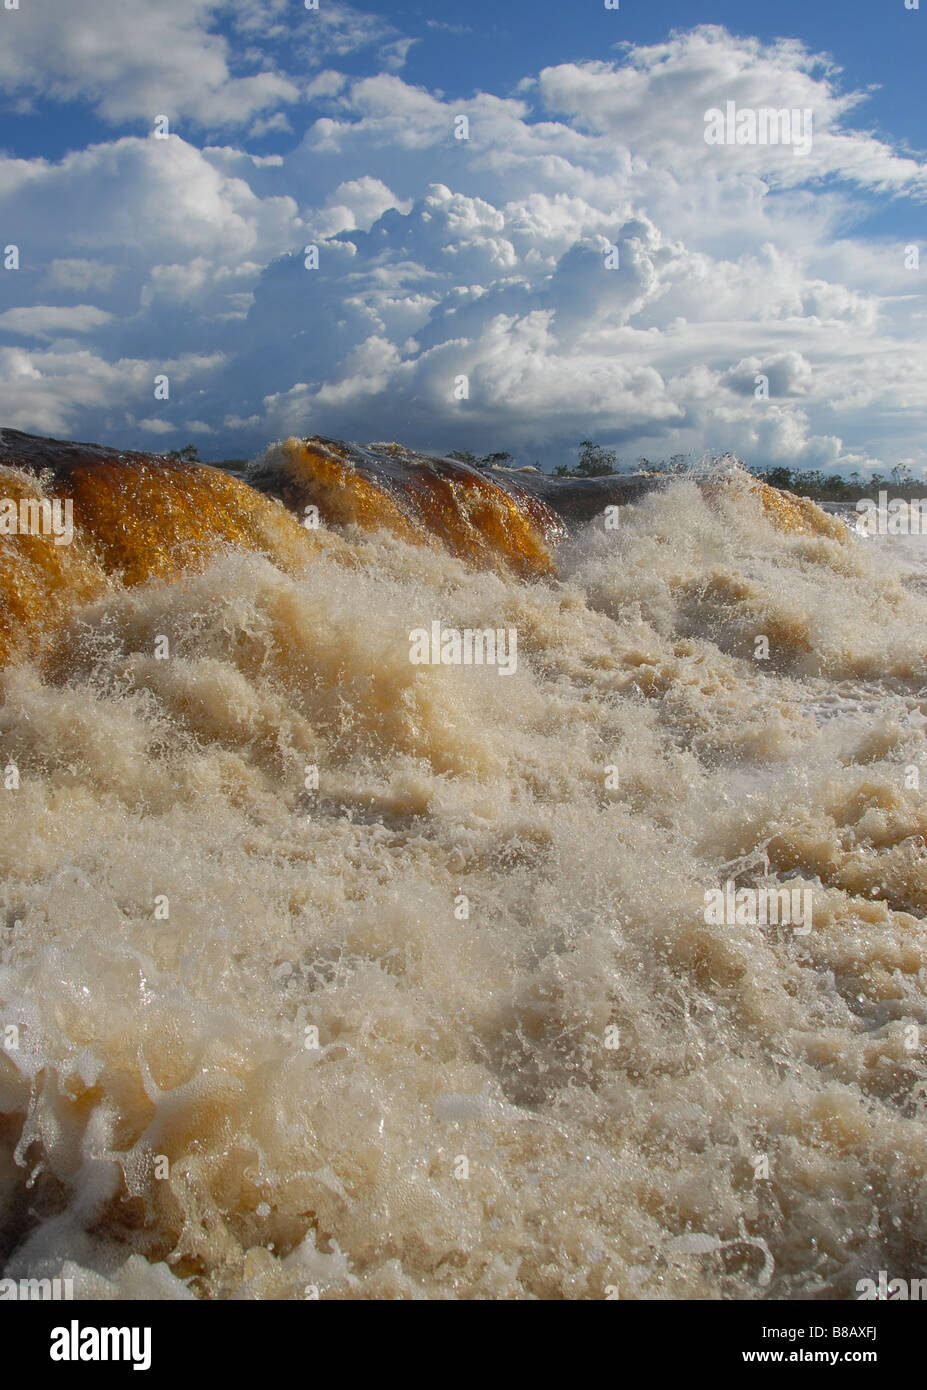 Venezuela river in summer flood. Stock Photo